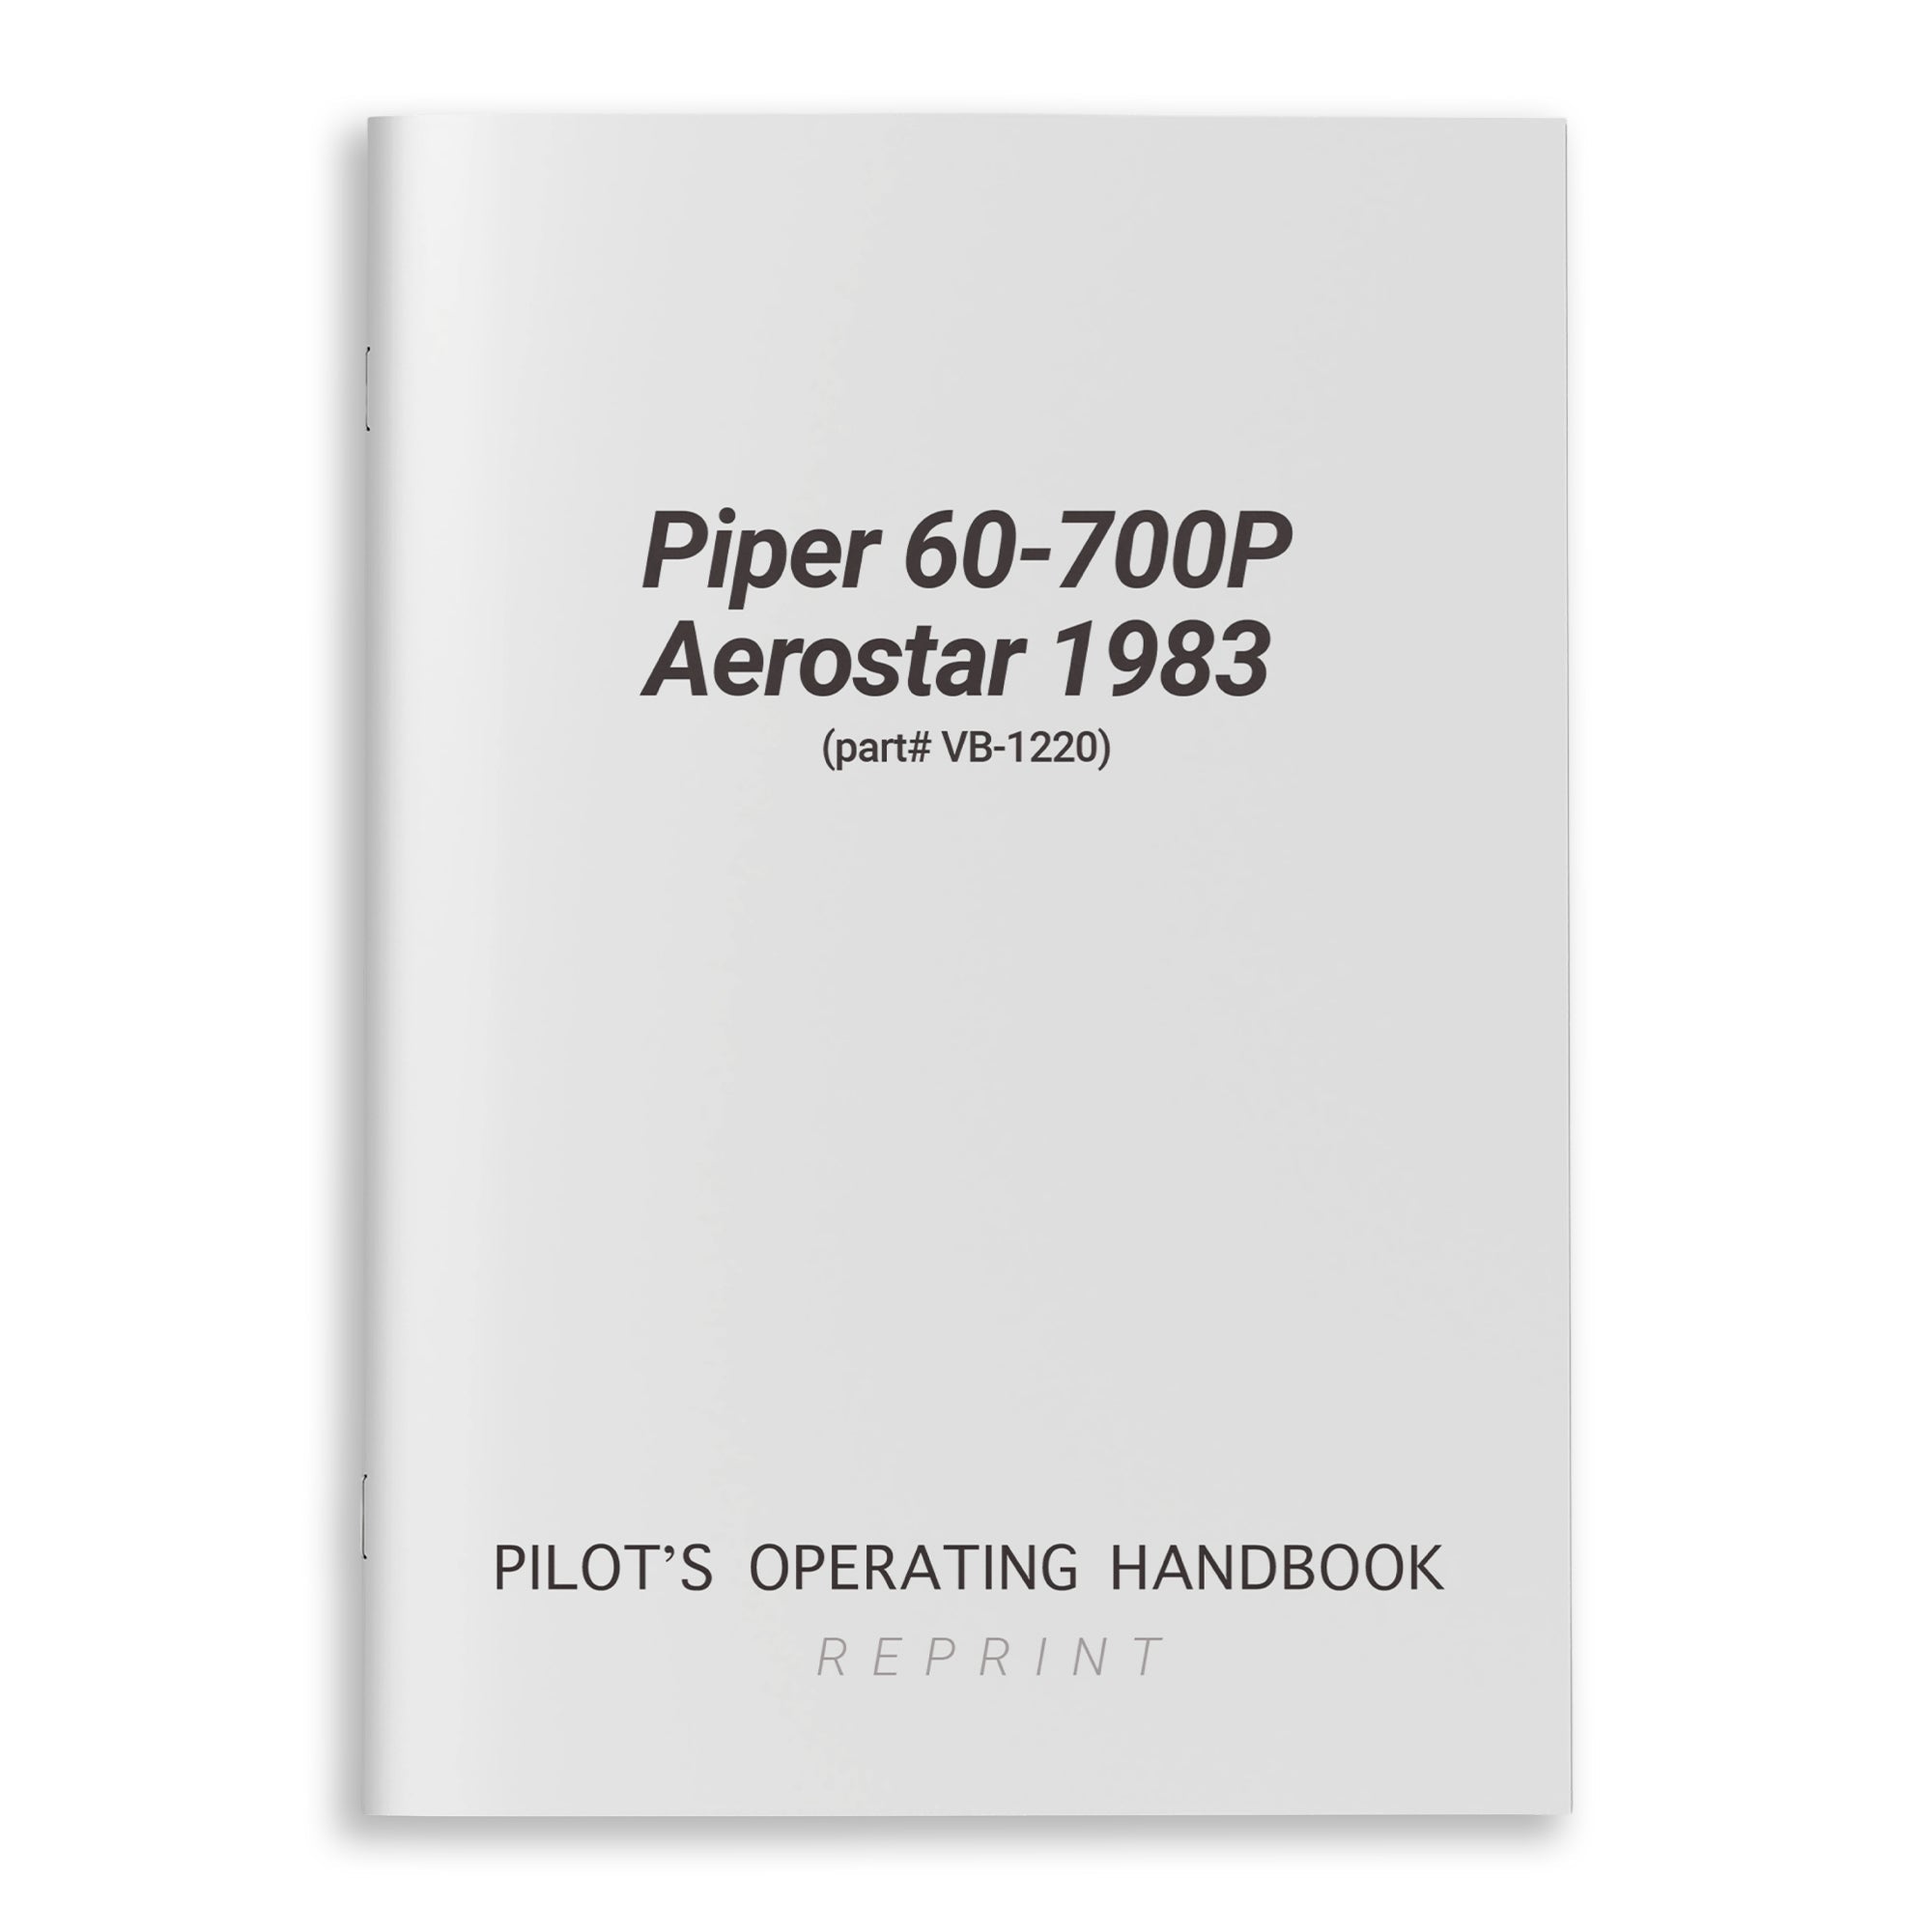 Piper 60-700P Aerostar 1983 Pilot's Operating Handbook (part# VB-1220) - PilotMall.com